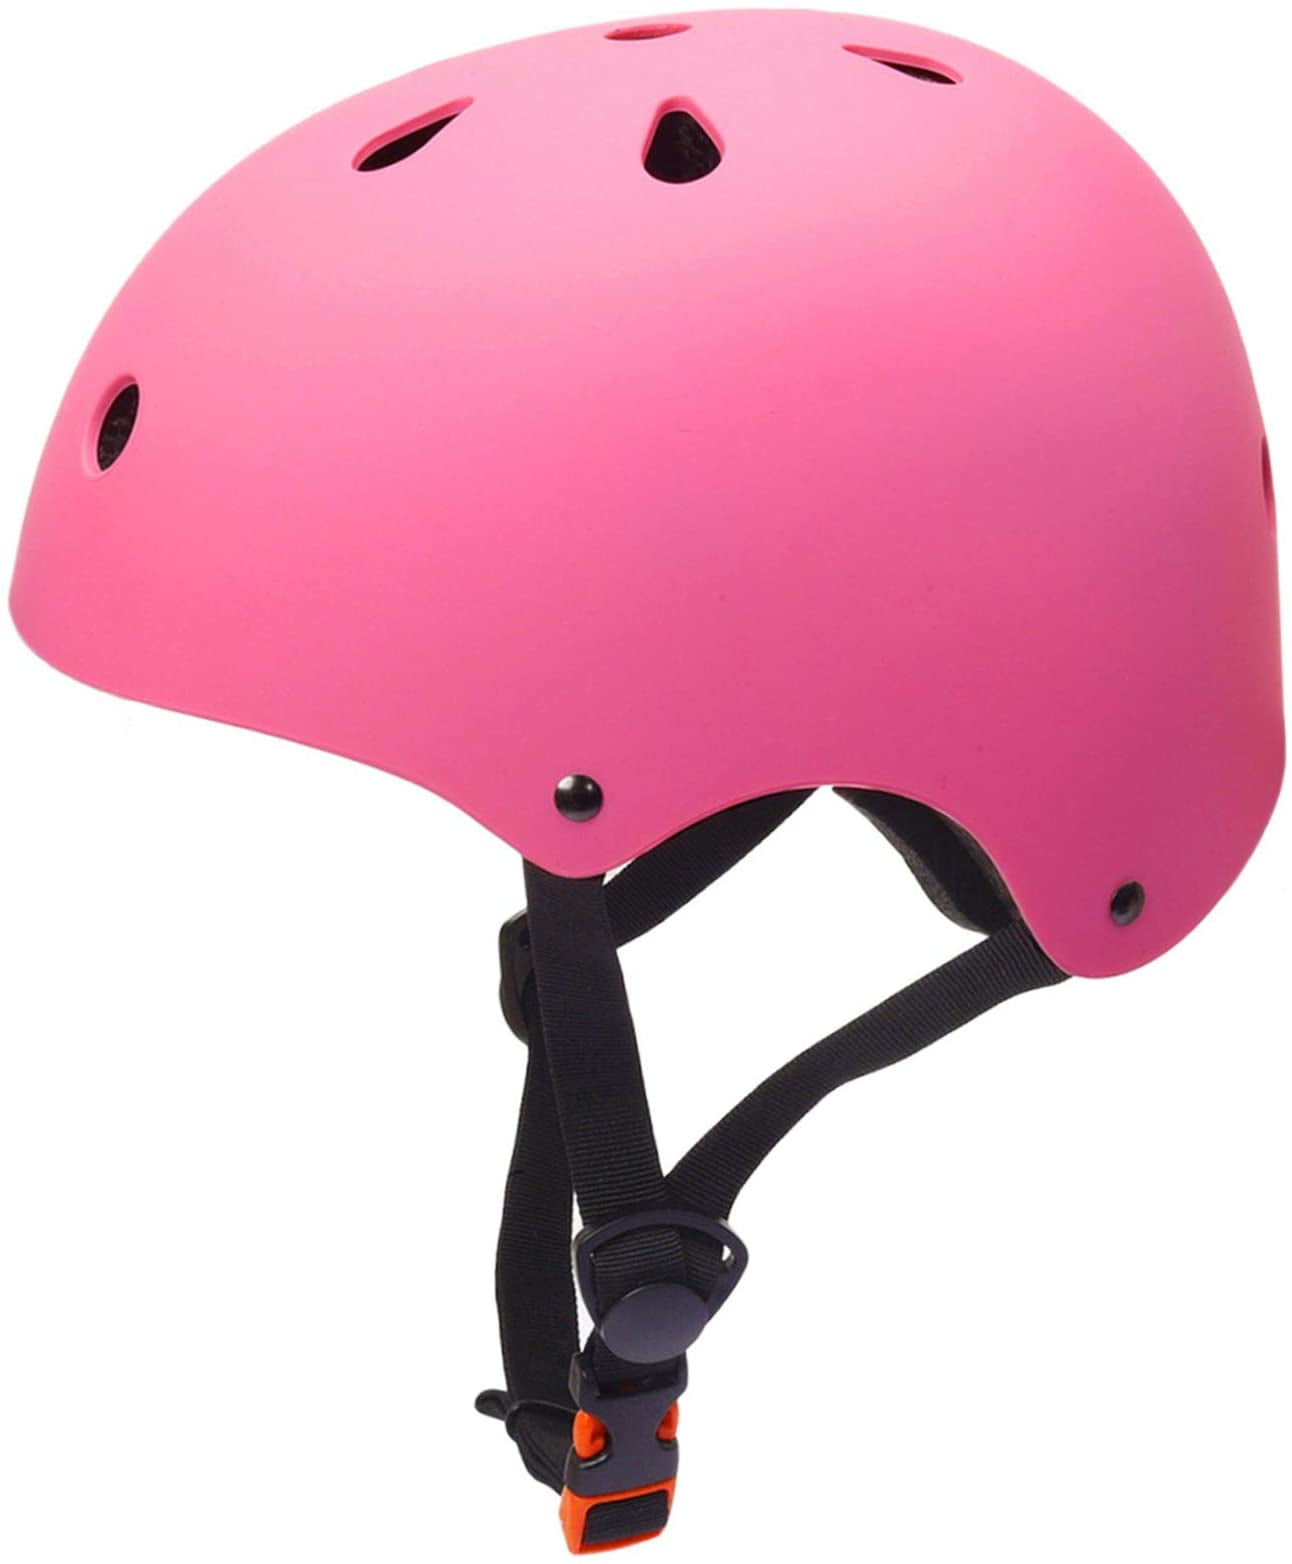 MTB Skate BMX Scooter Skateboard Bike Bicycle Safety Helmet for Men Women